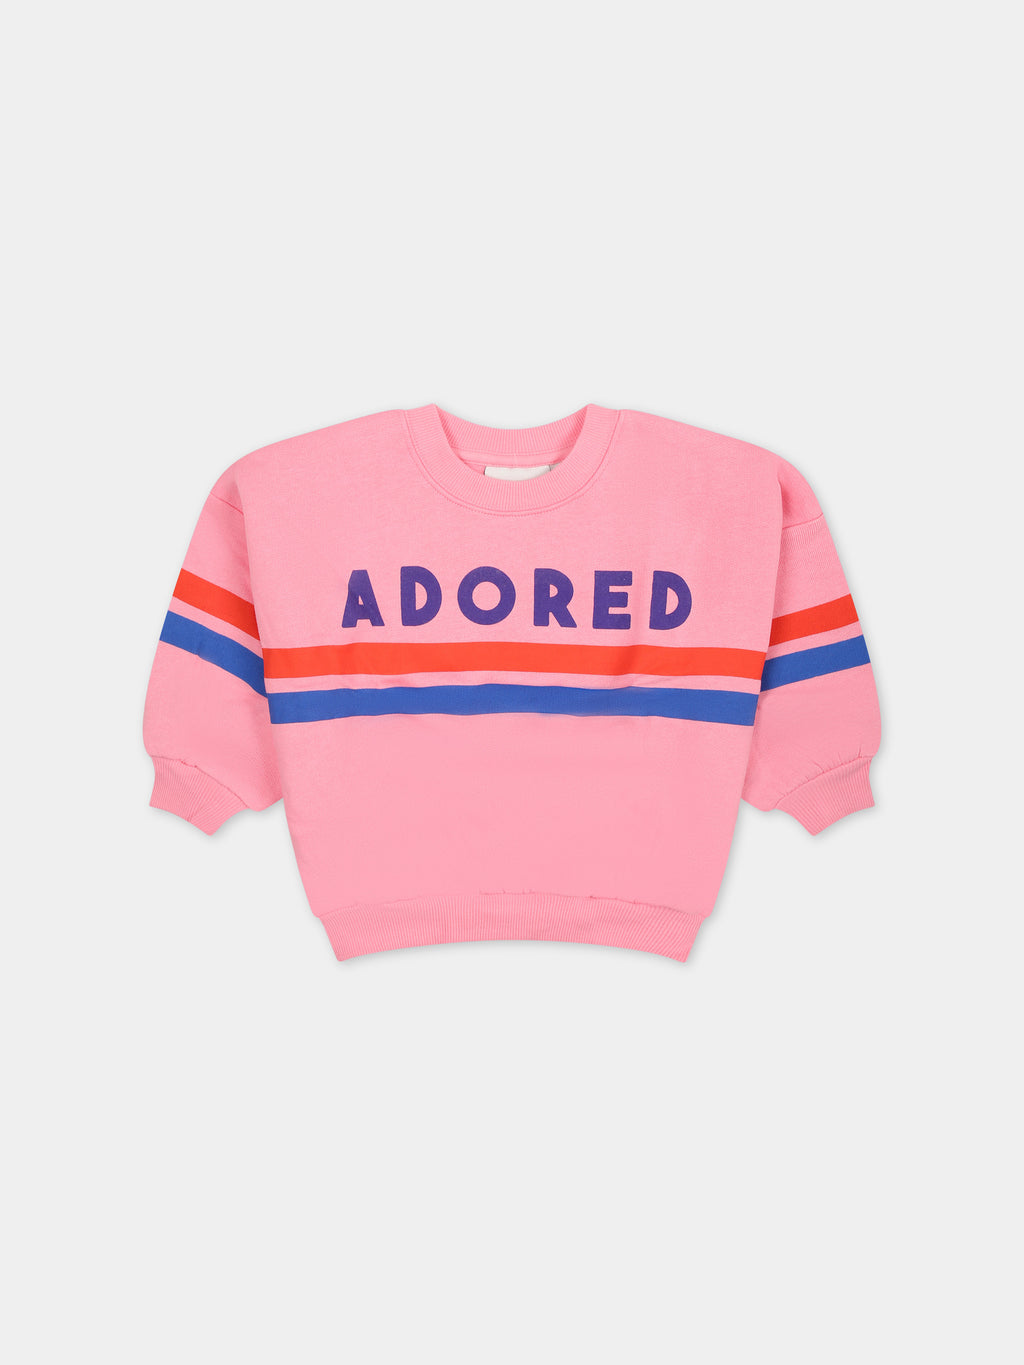 Pink sweatshirt for baby girl with writing